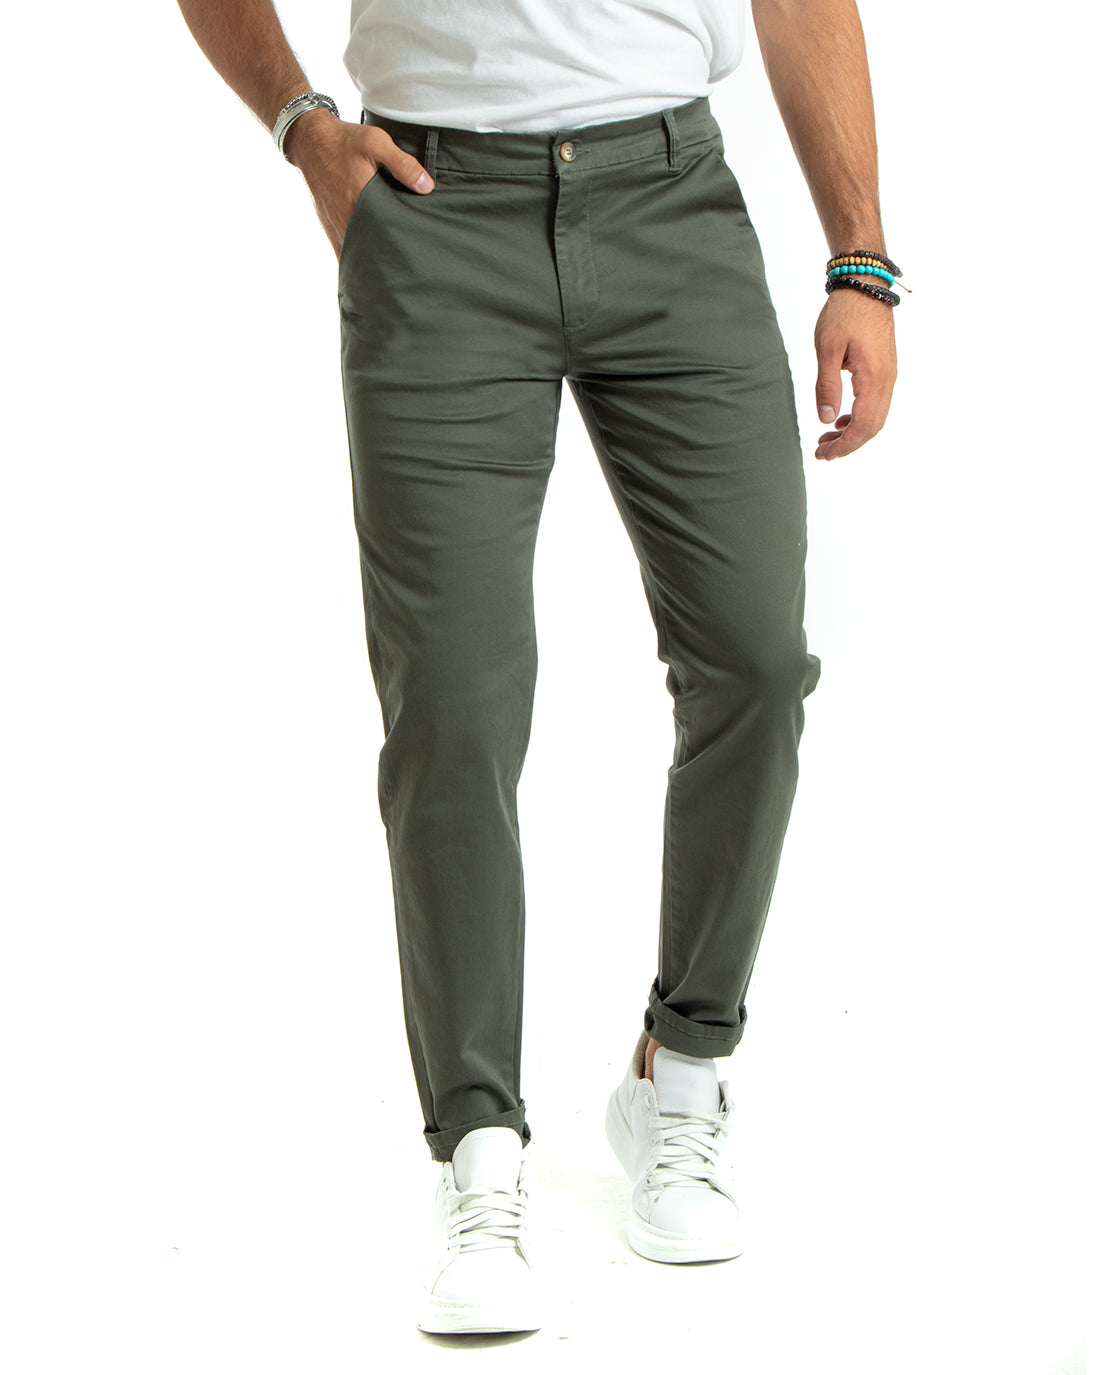 Pantaloni Uomo Cotone Raso Tasca America Slim Fit Tinta Unita Verde GIOSAL-P5972A